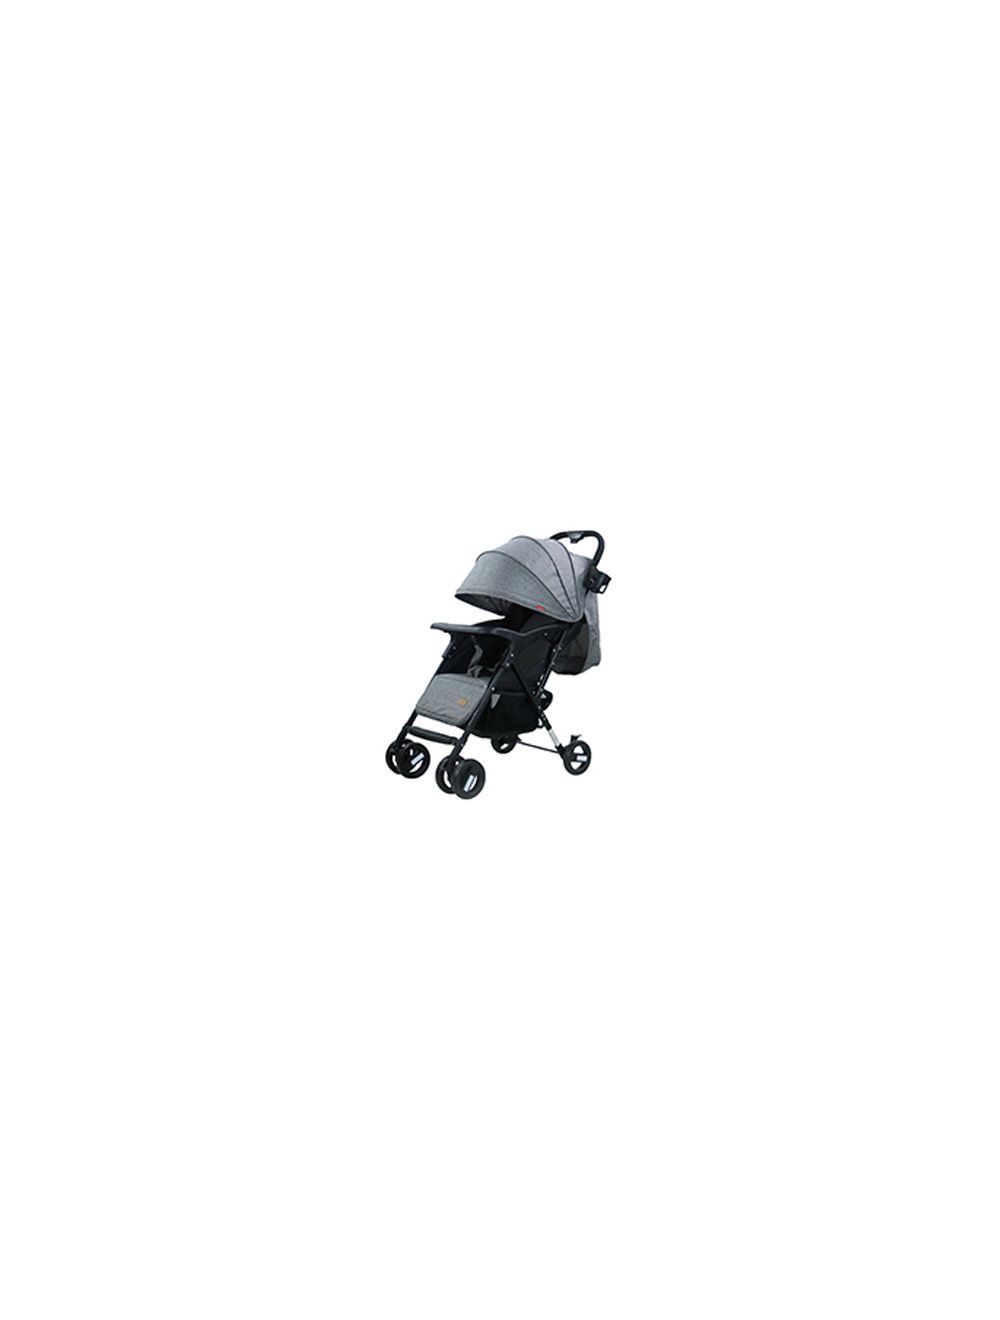 Joymaker Baby Stroller Grey & Black